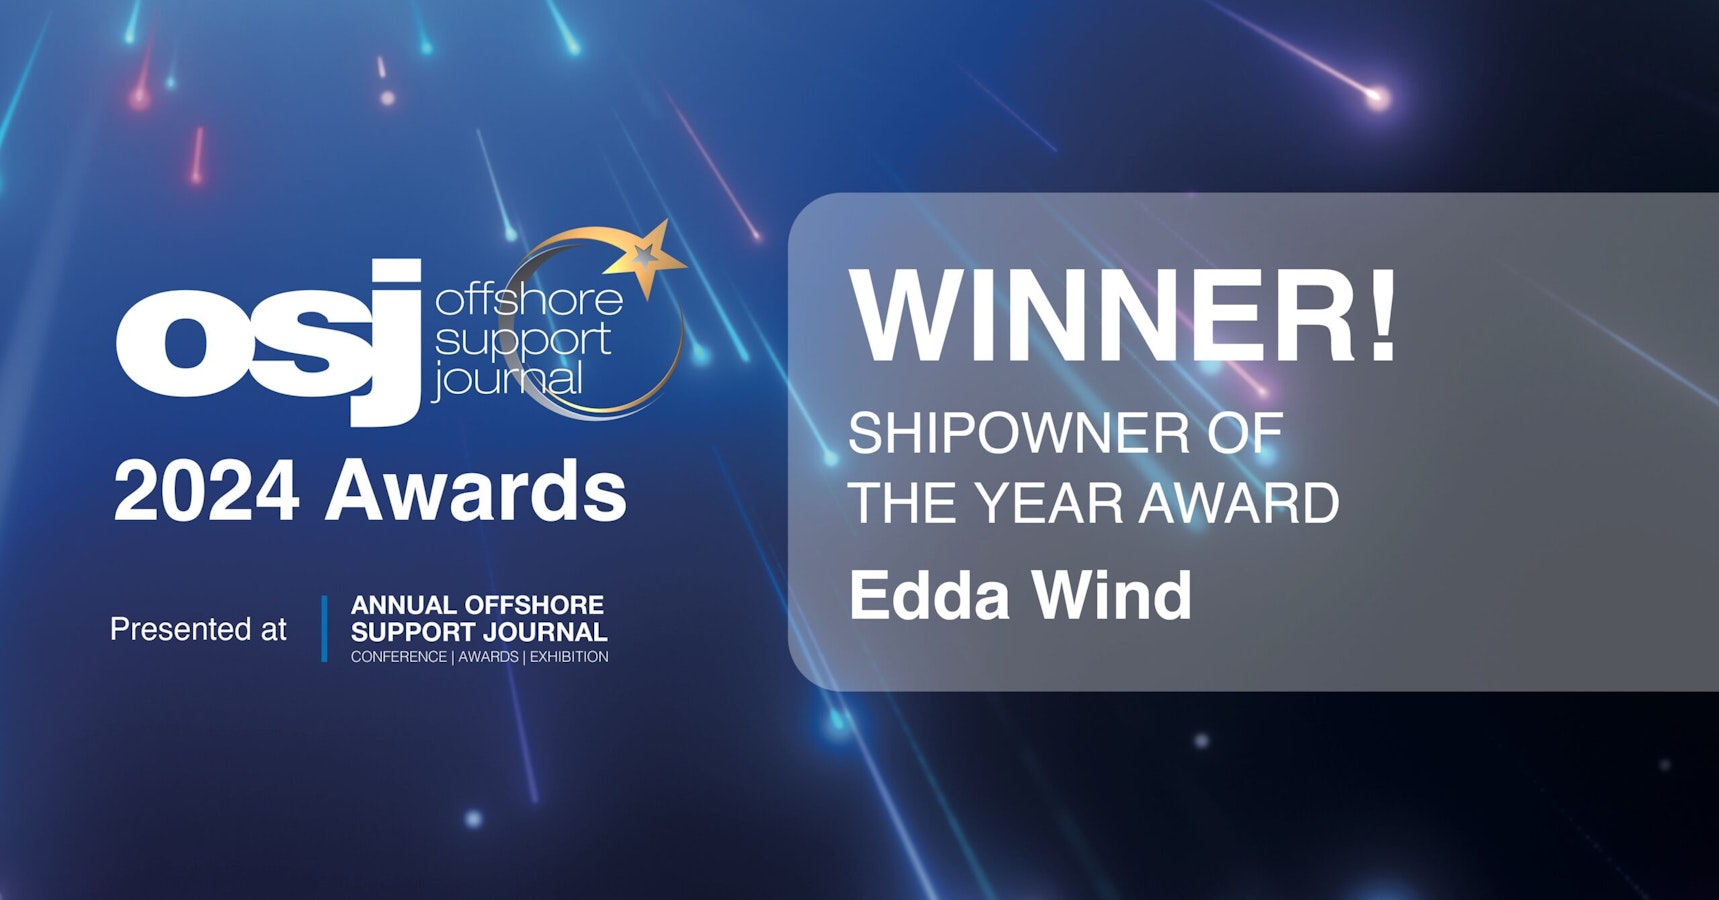 Edda Wind is Shipowner of the Year Award winner!